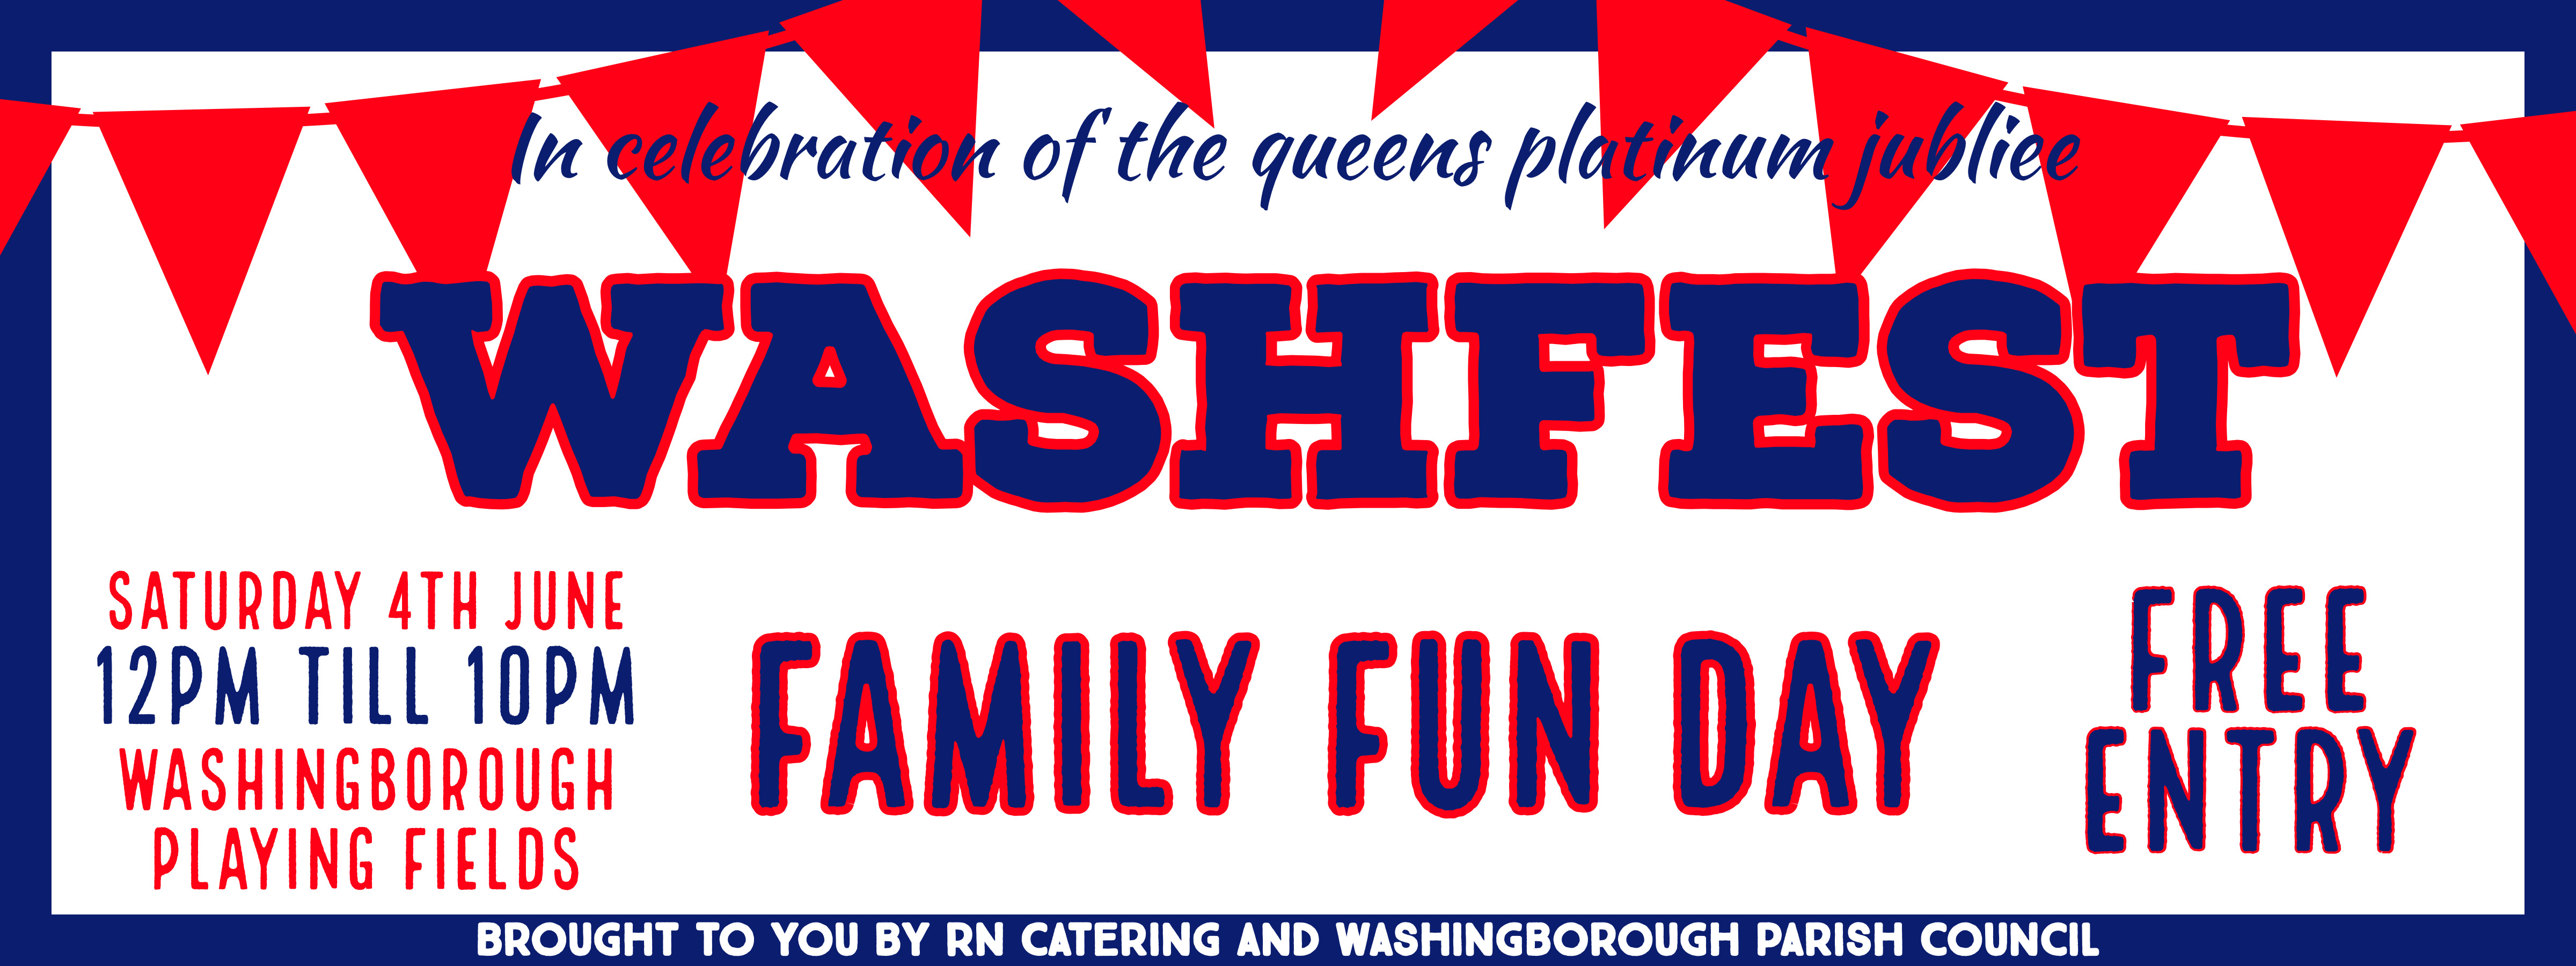 Washingborough Jubilee Celebration event